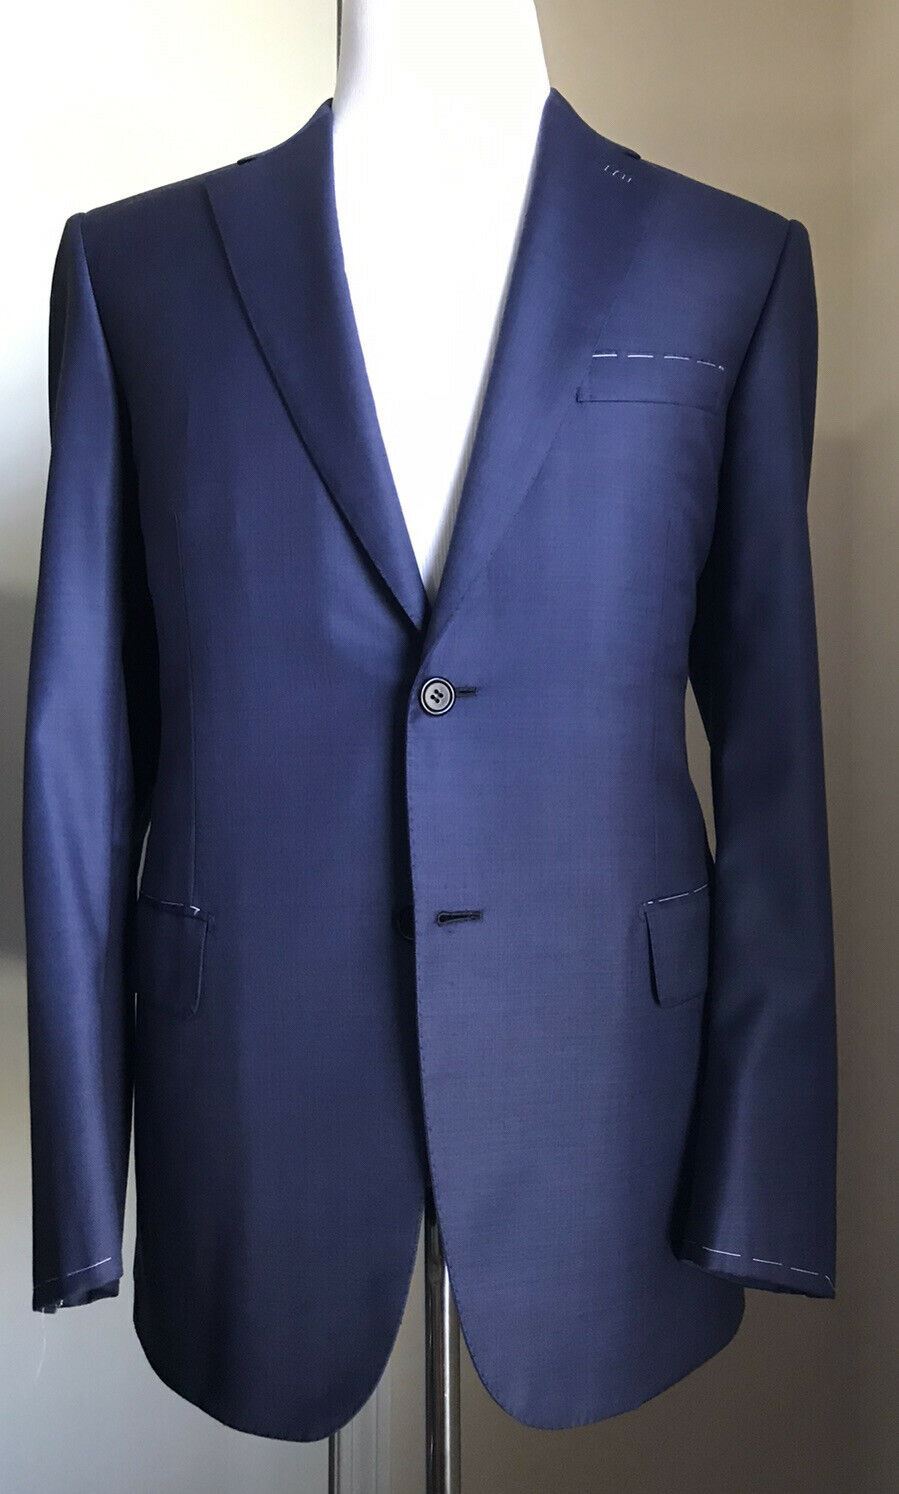 NWT $5700 Brioni Men’s Wool Sport Coat Blazer Jacket Blue 40R US/50R Eu Italy